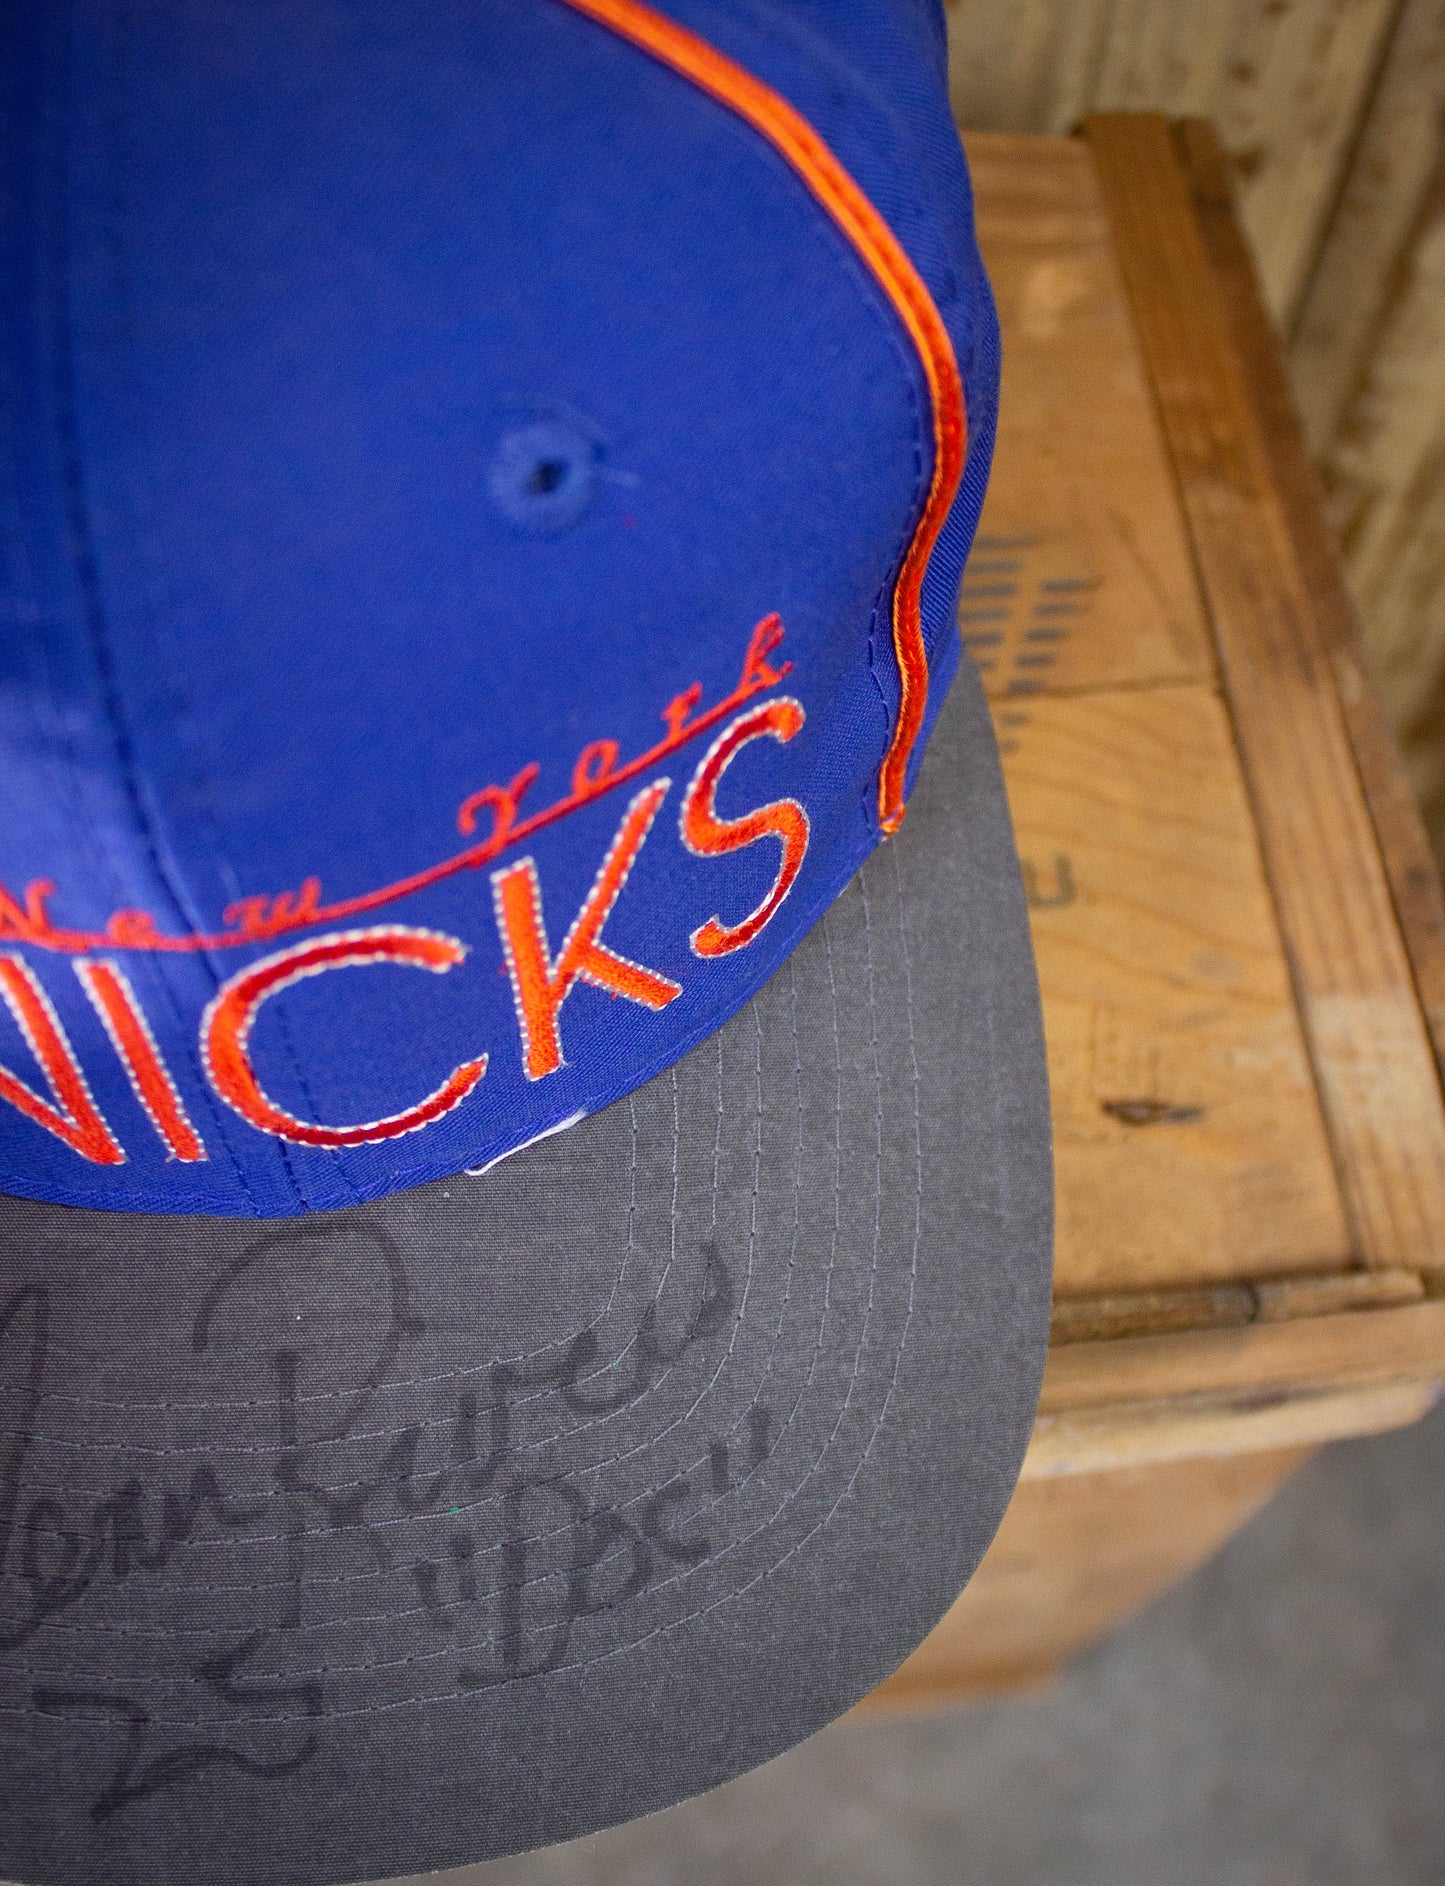 Vintage 90s New York Knicks Doc Rivers Signed NBA Hat